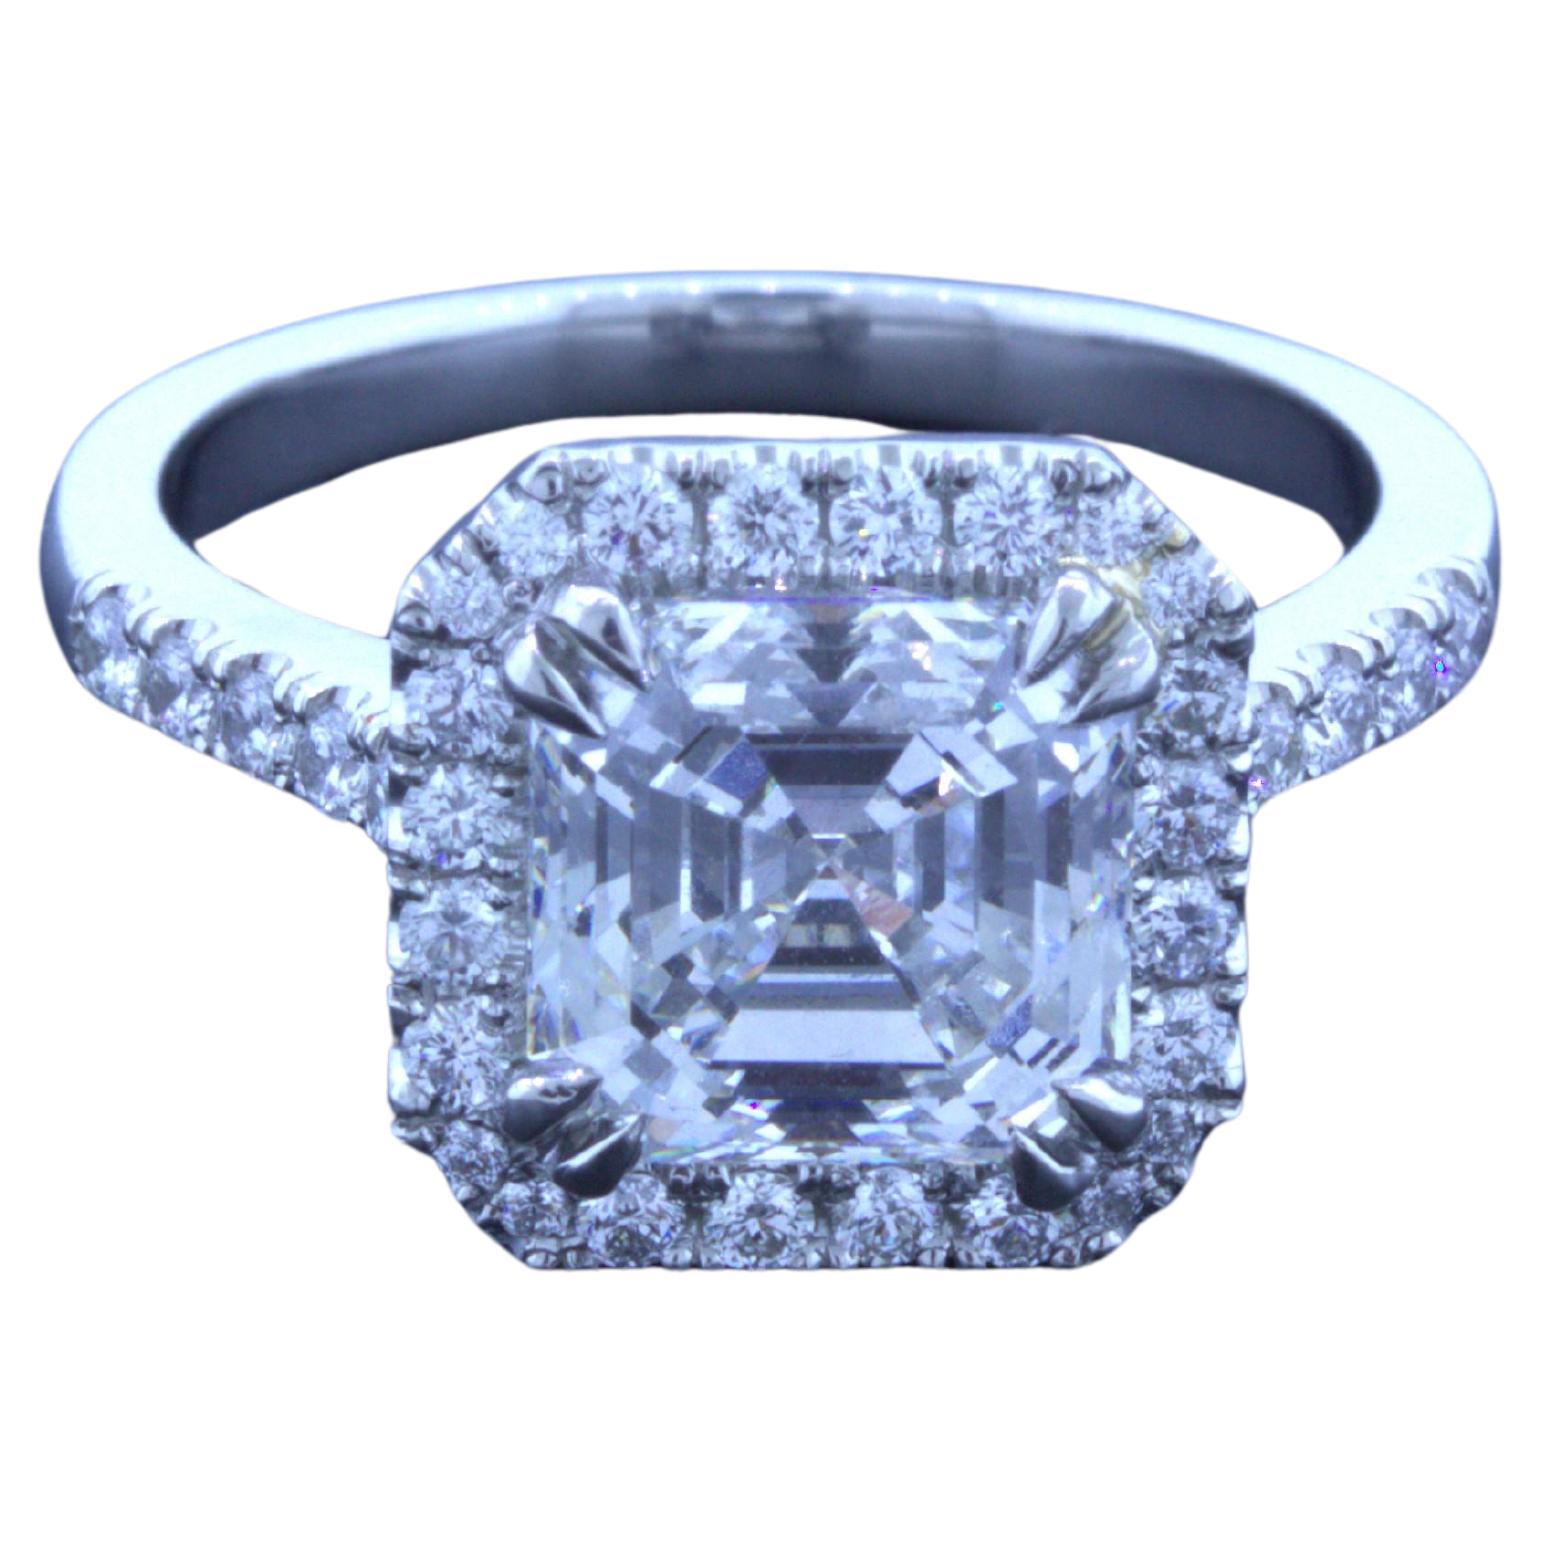 3.05 Carat Asscher-cut Diamond Platinum Engagement Ring, E-VS1 EGL Certified For Sale